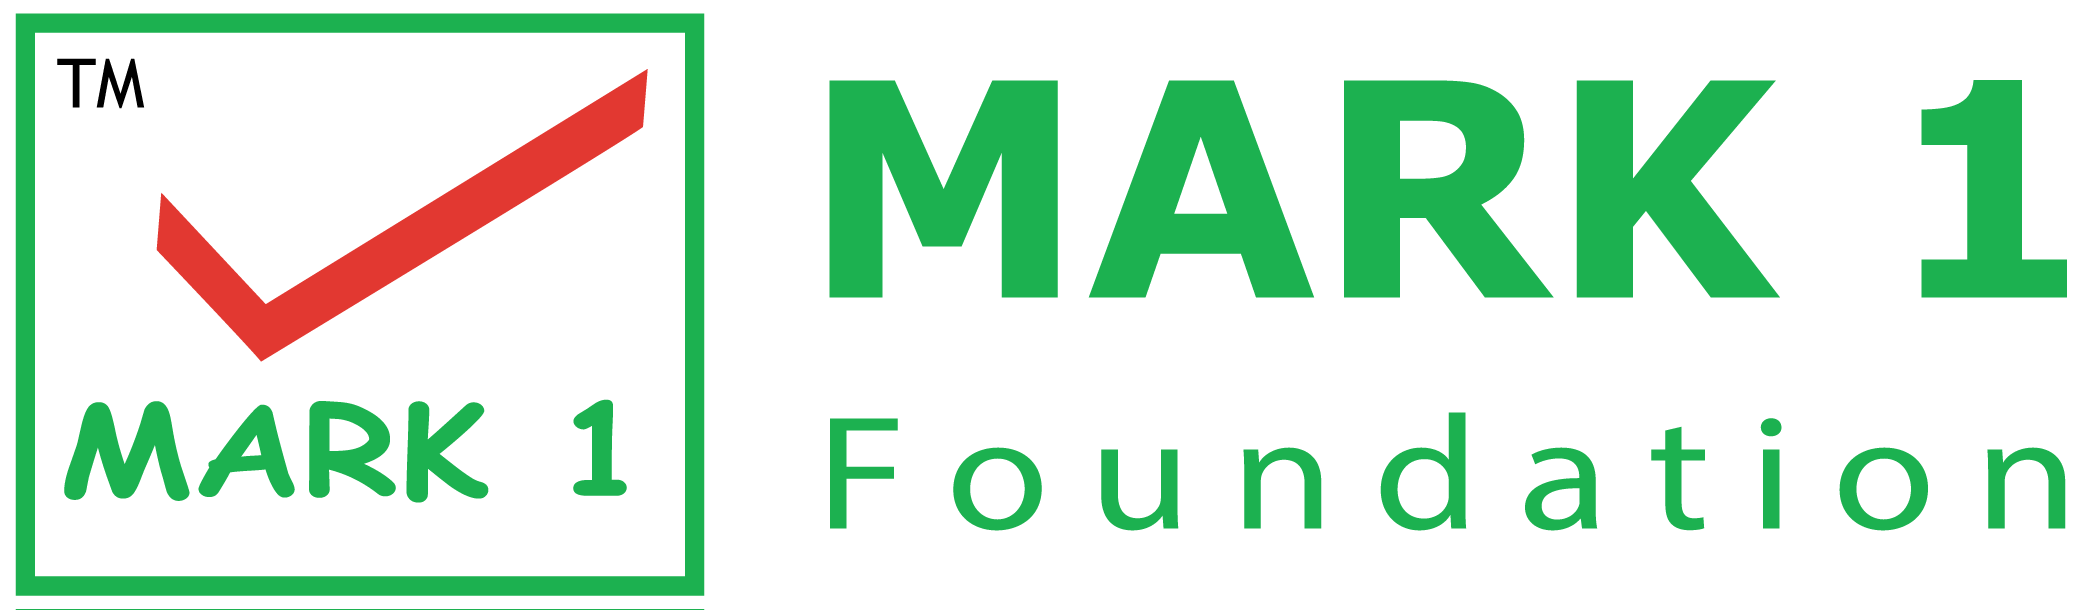 MARK 1 Foundation